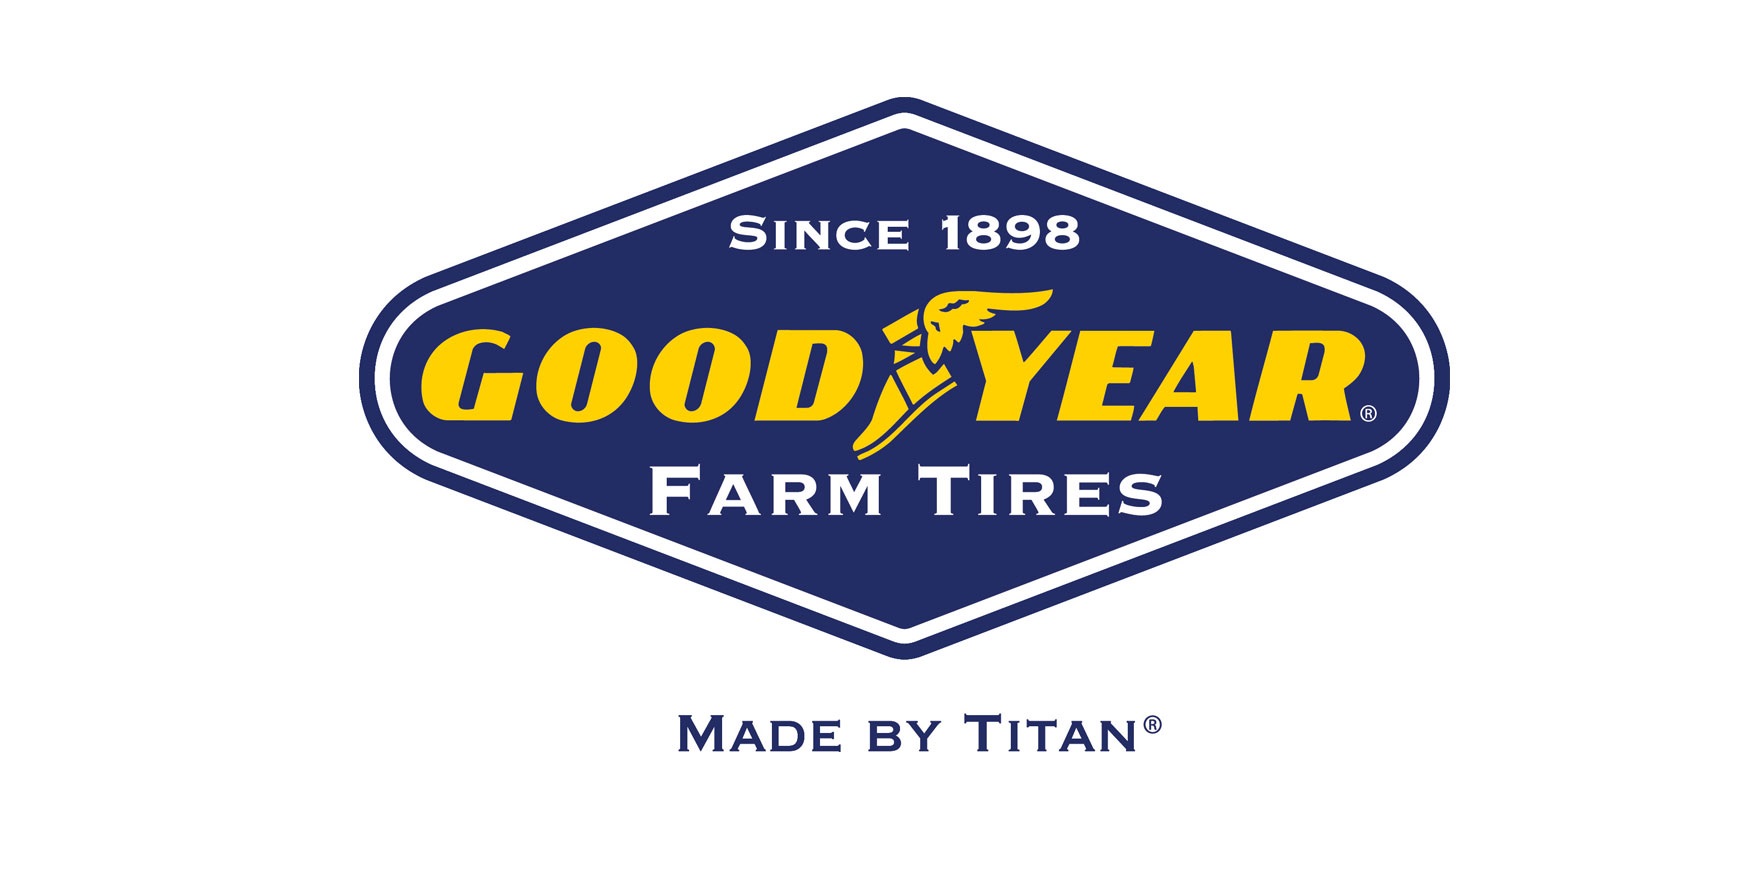 Titan and Goodyear Farm Tires